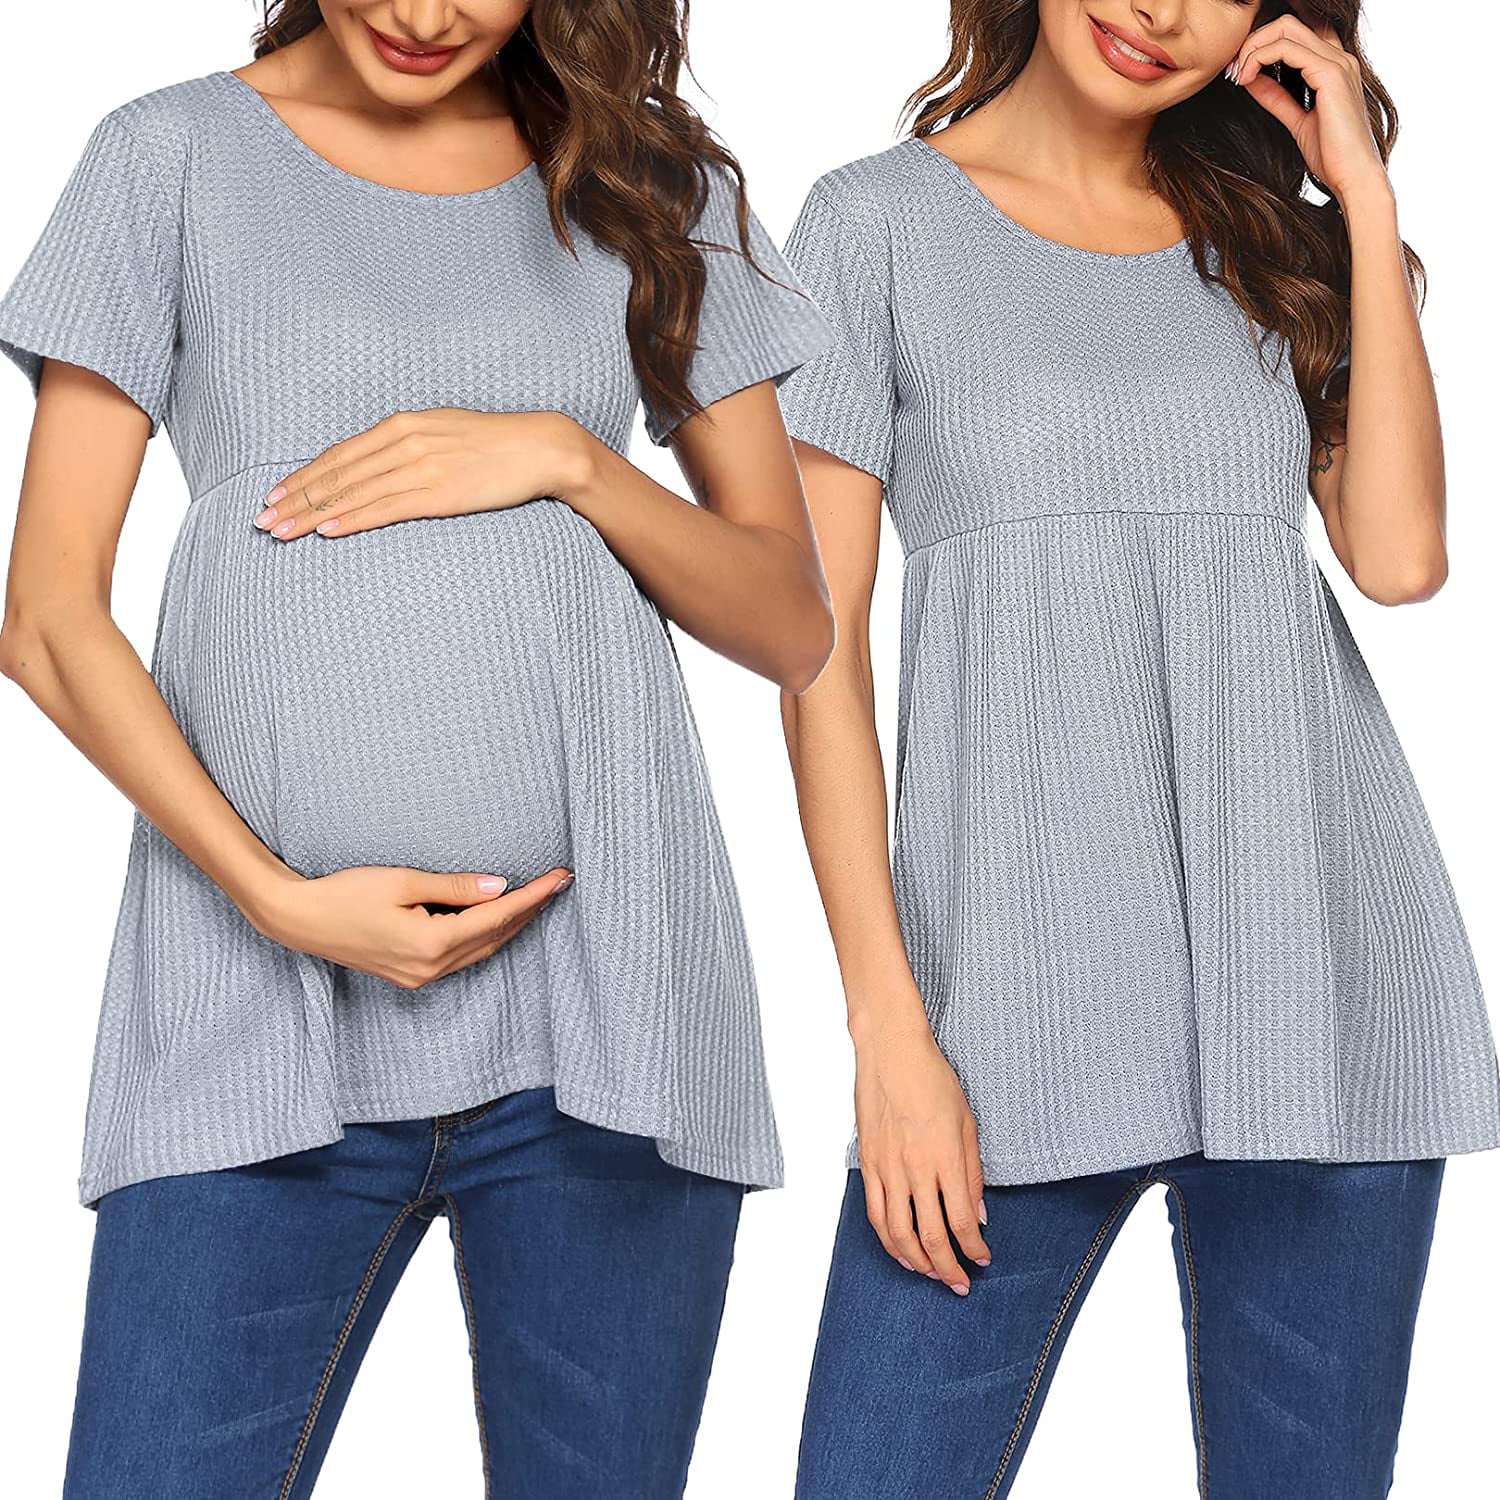 Hotouch Women's Maternity Tops Waffle Knit Short Sleeve Criss Cross Back Shirts Peplum Pregnancy Blouse S-XXL 